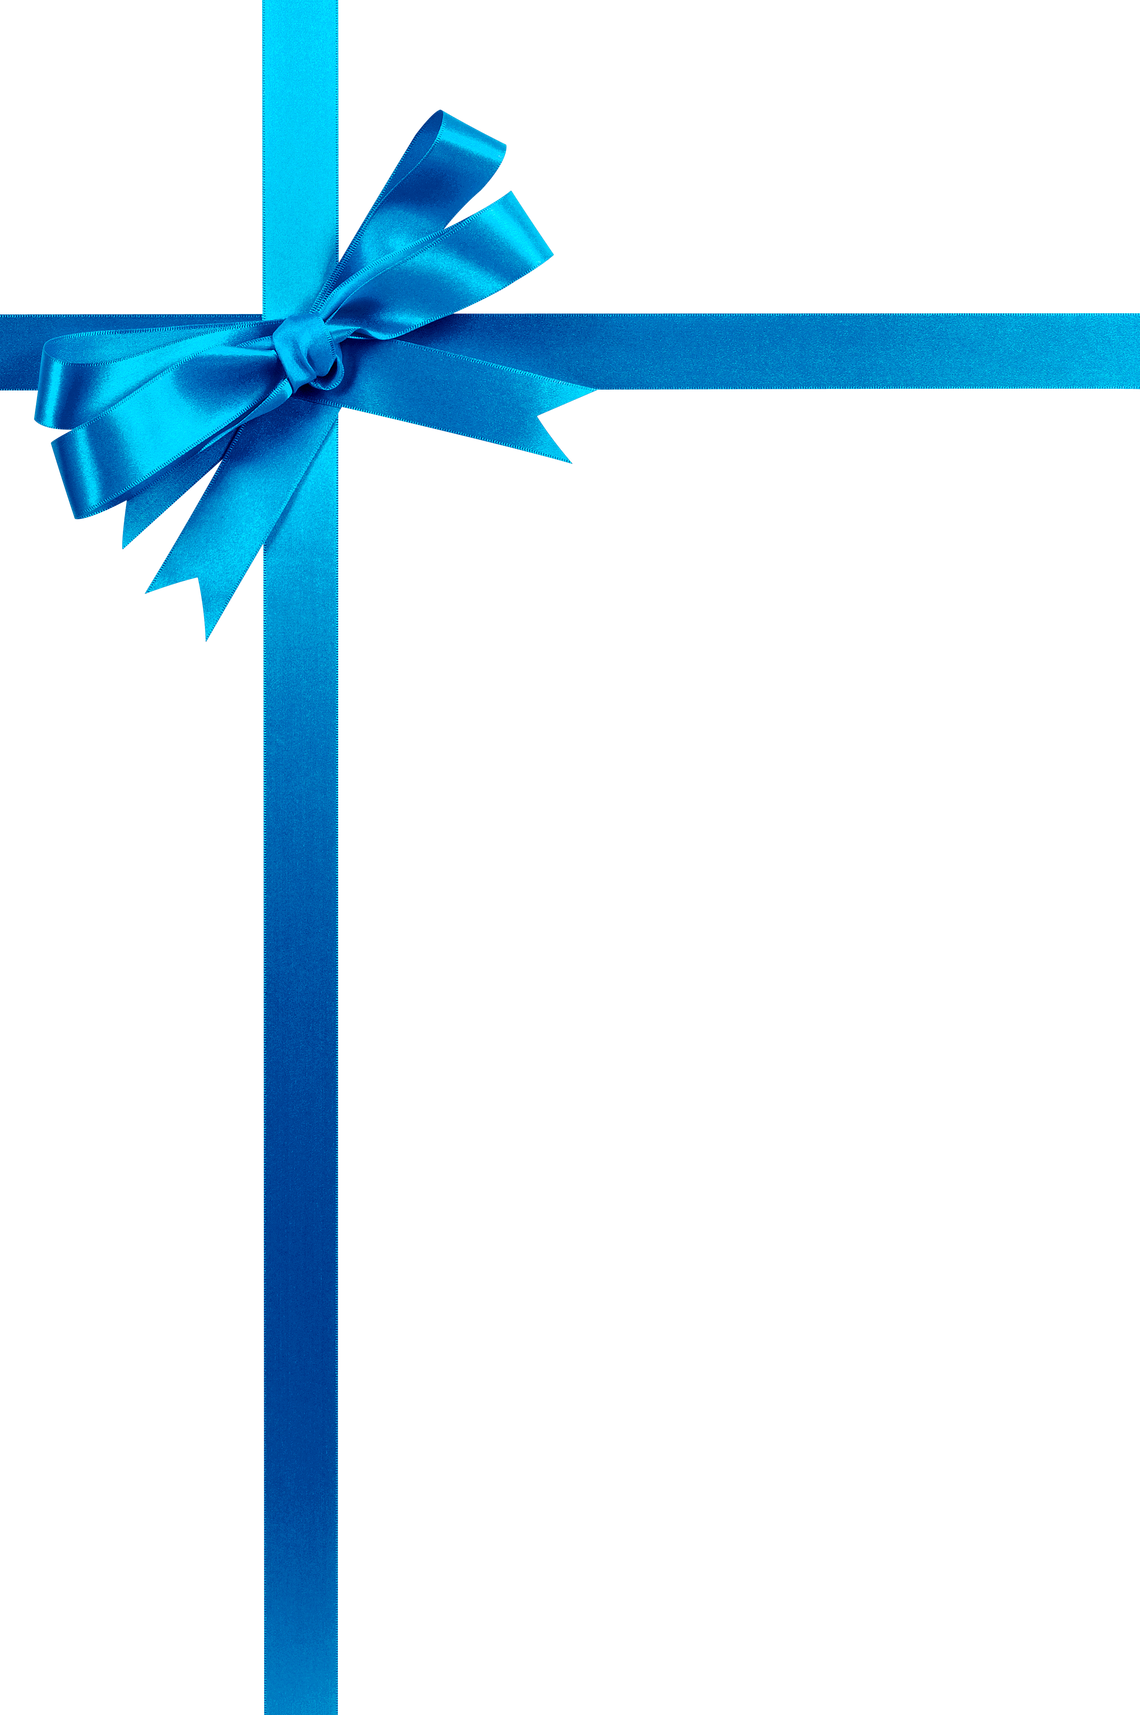 Blue Christmas Gift Ribbon 